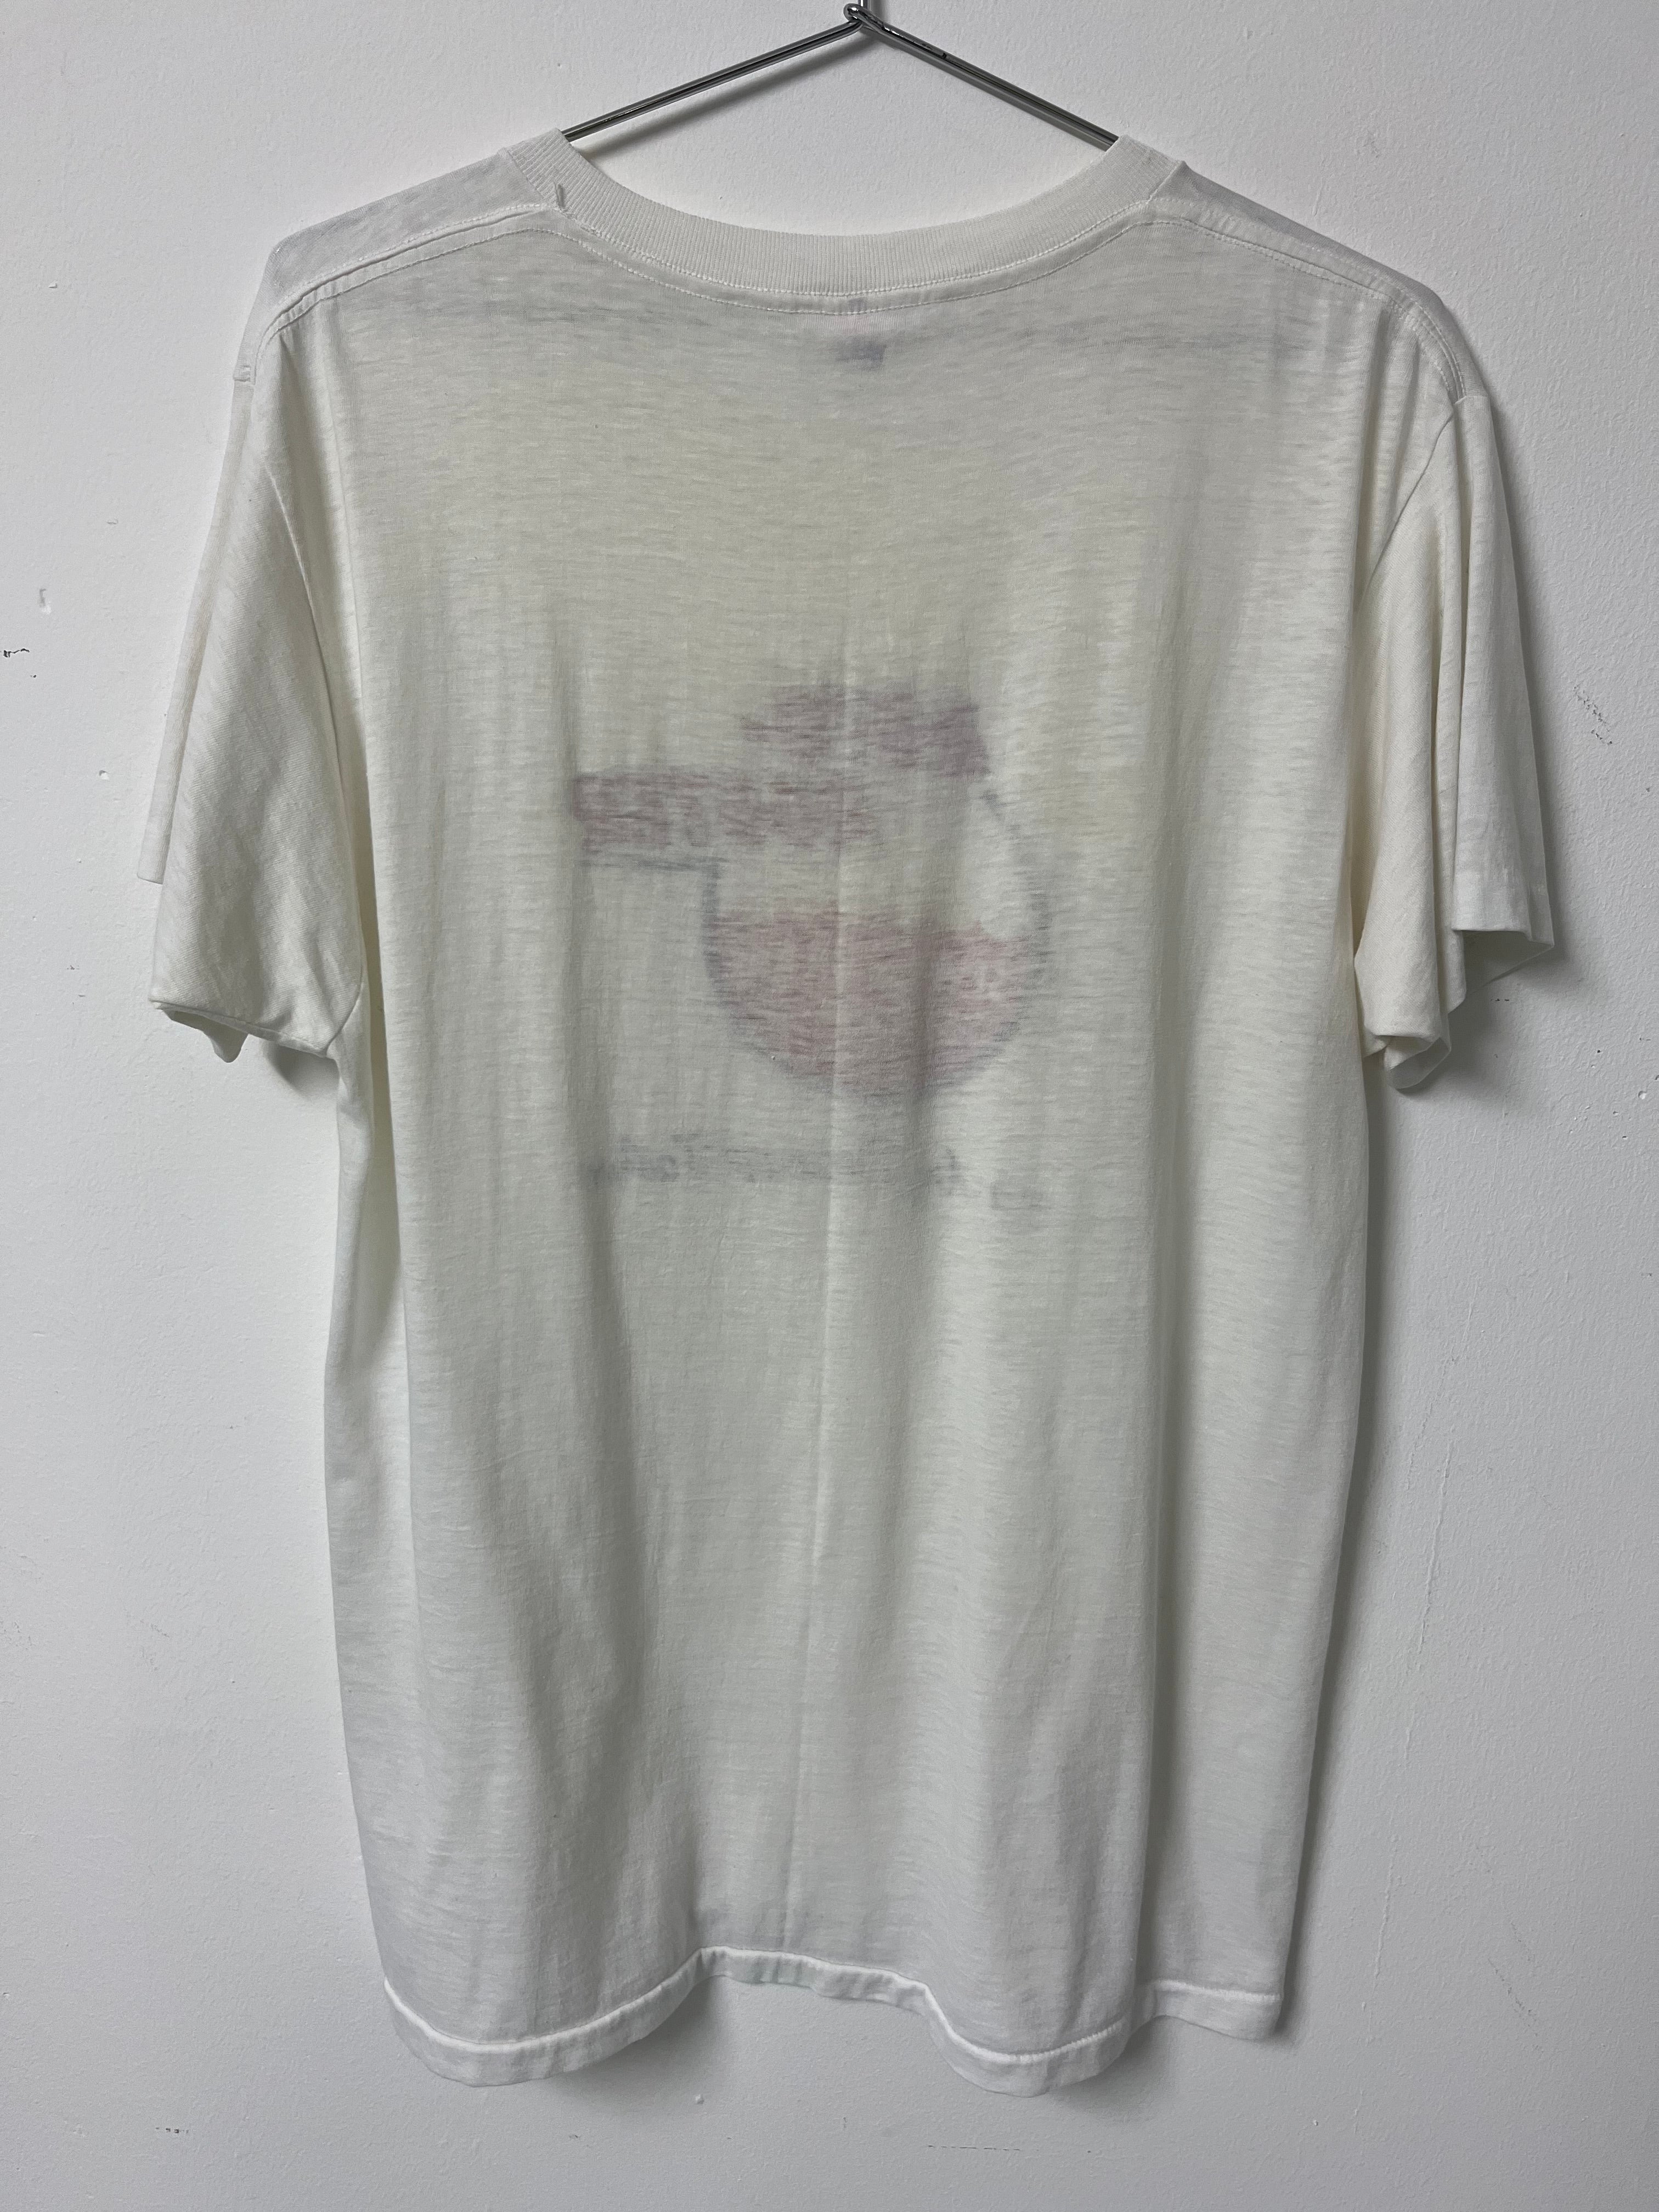 Vintage Men's T-Shirt - White - XL